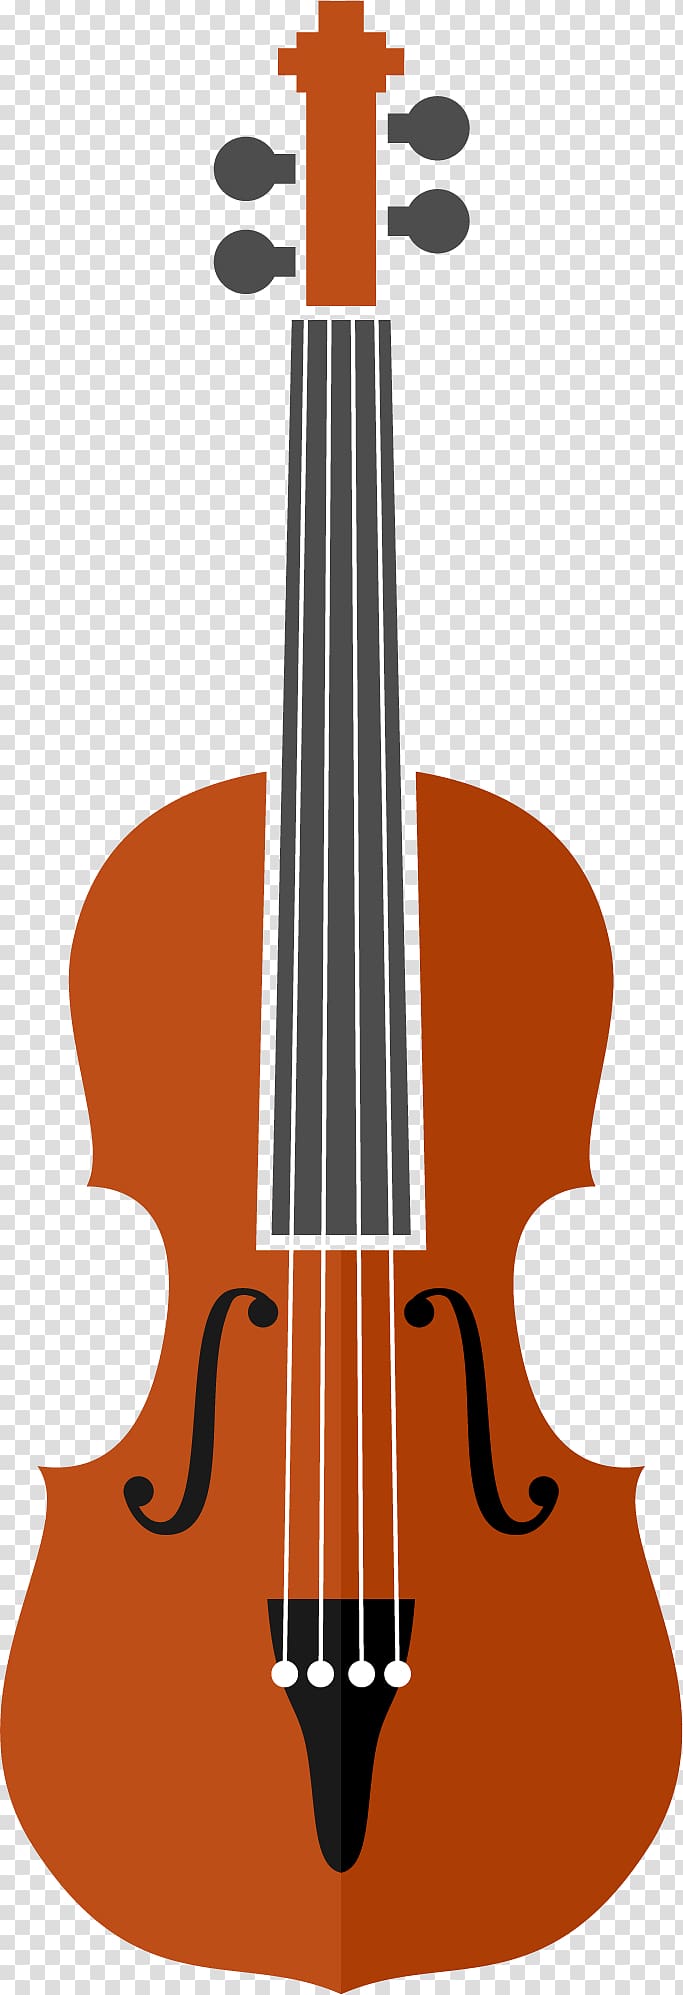 Stradivarius Violin Cello Musical instrument Viola, Cartoon violin transparent background PNG clipart